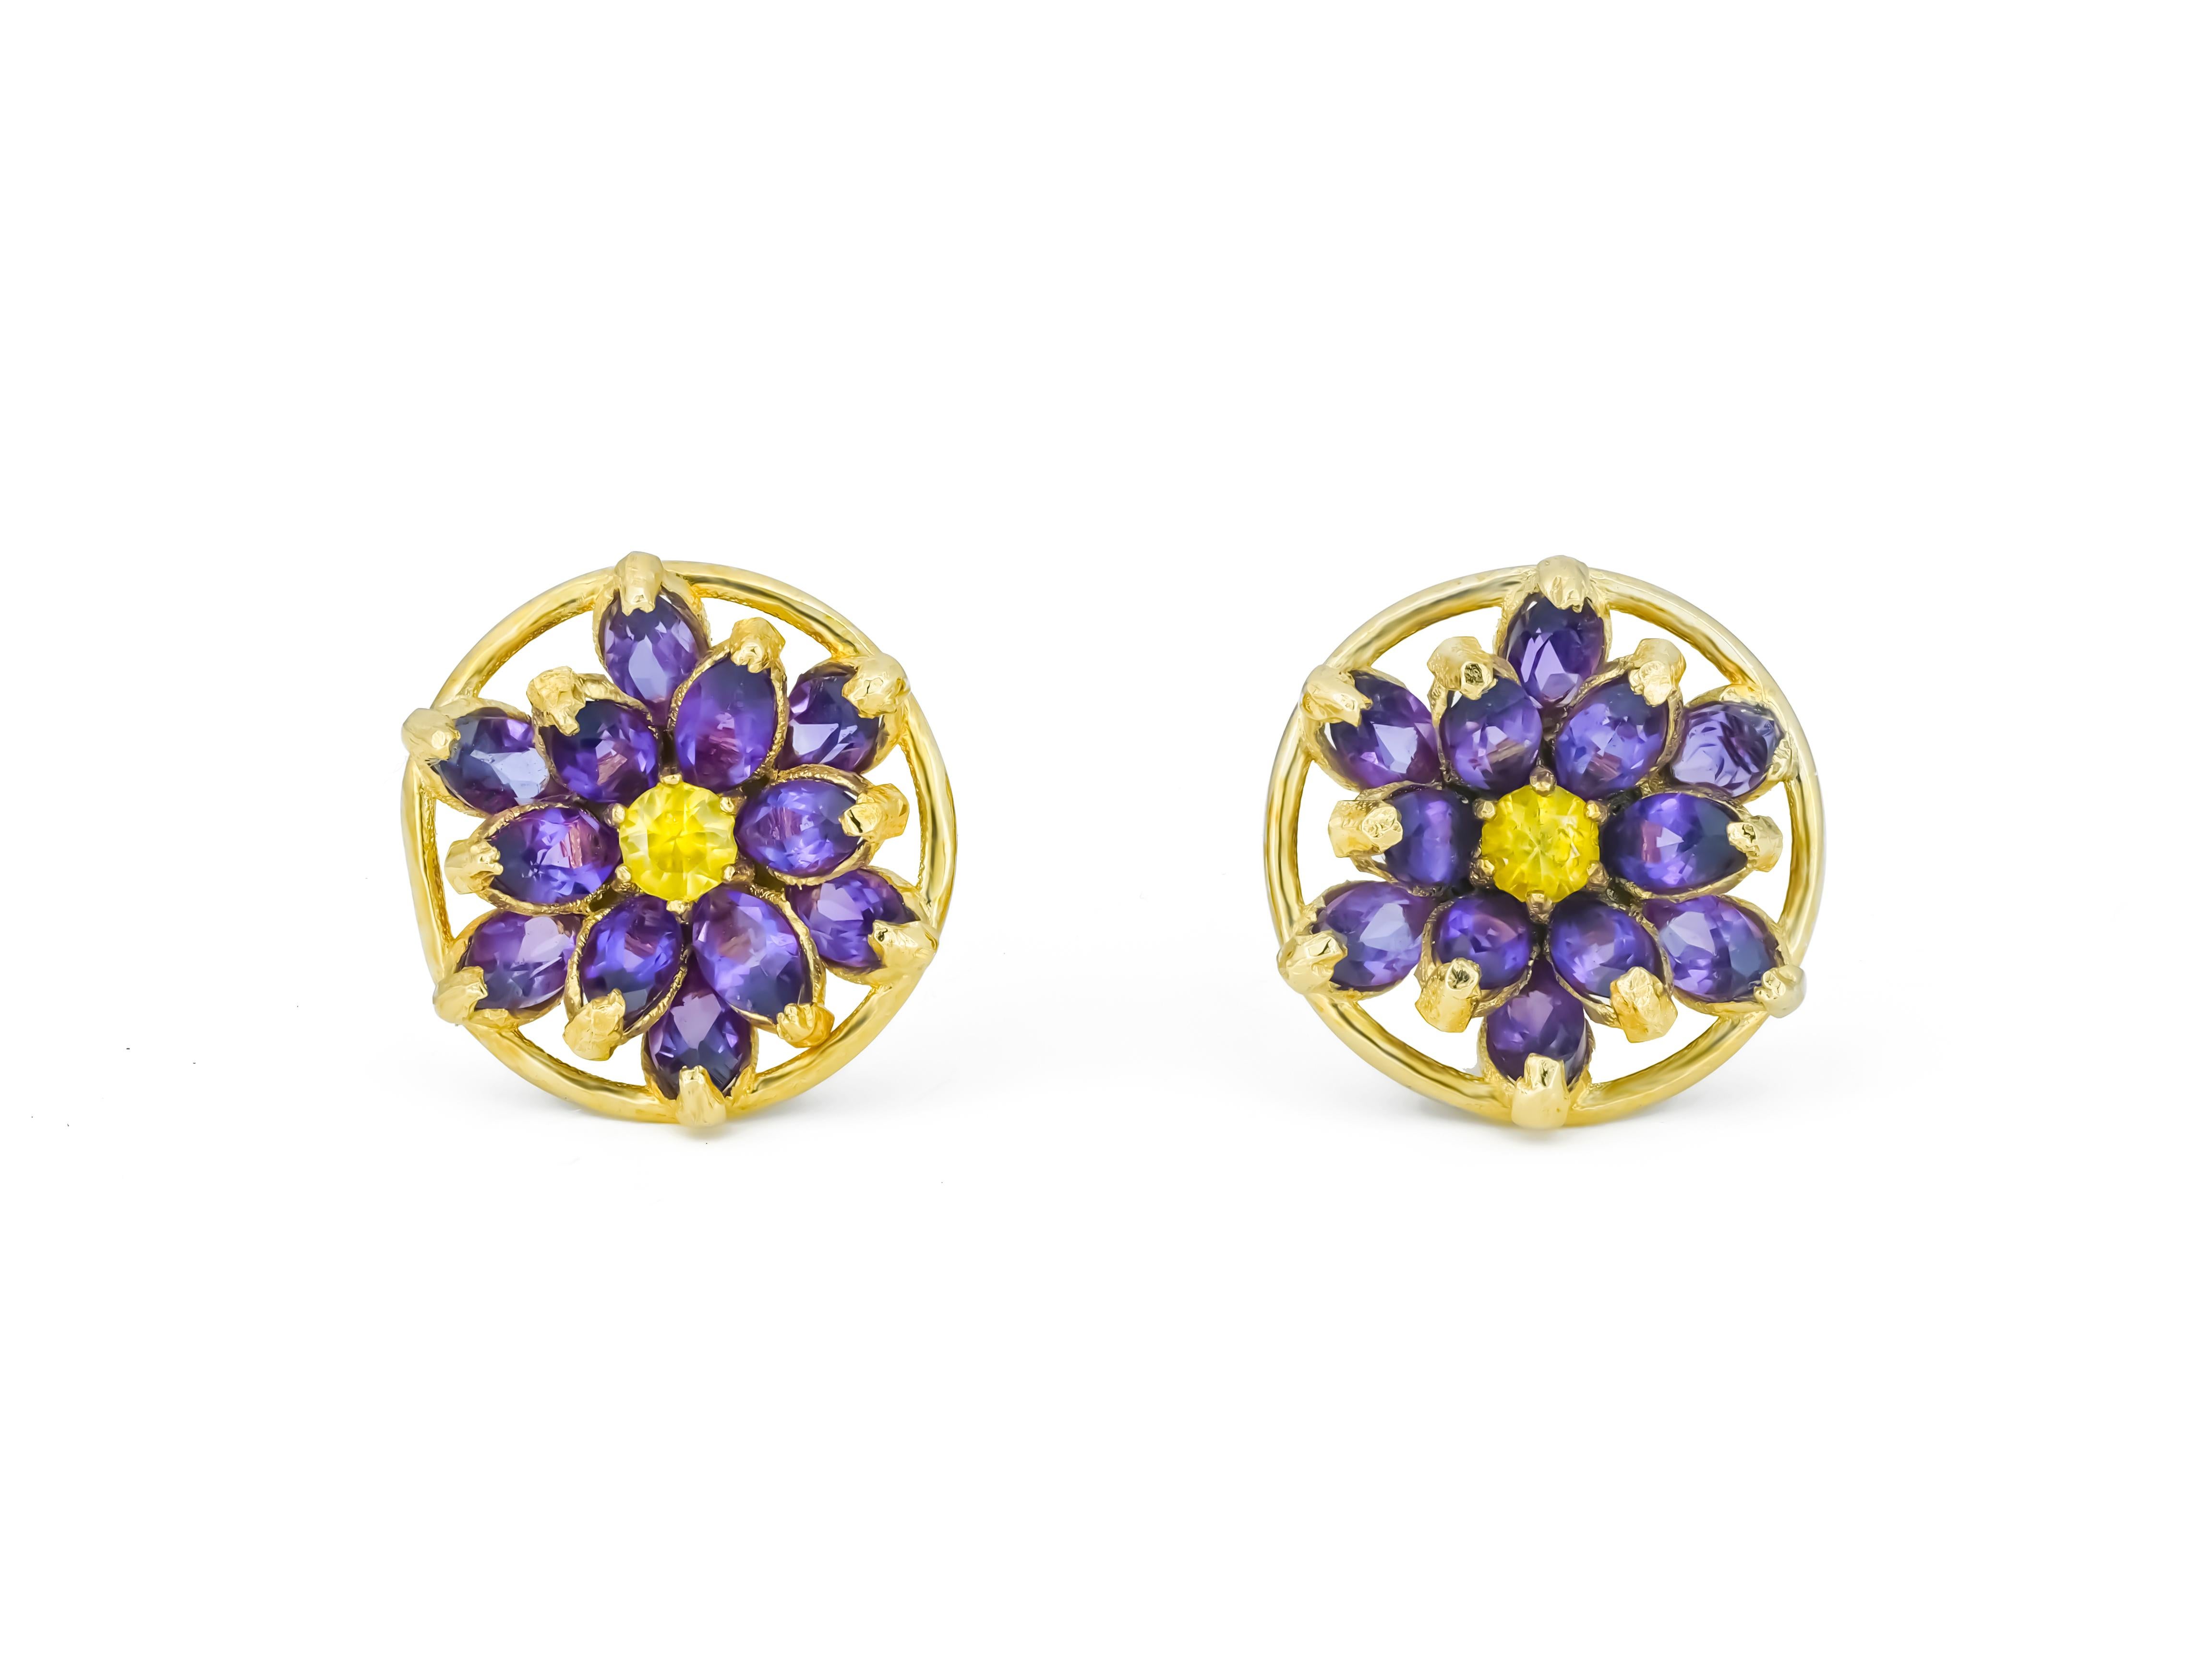 Lotus Flower Earrings Studs in 14k Gold, Amethyst and Sapphires Earrings For Sale 9